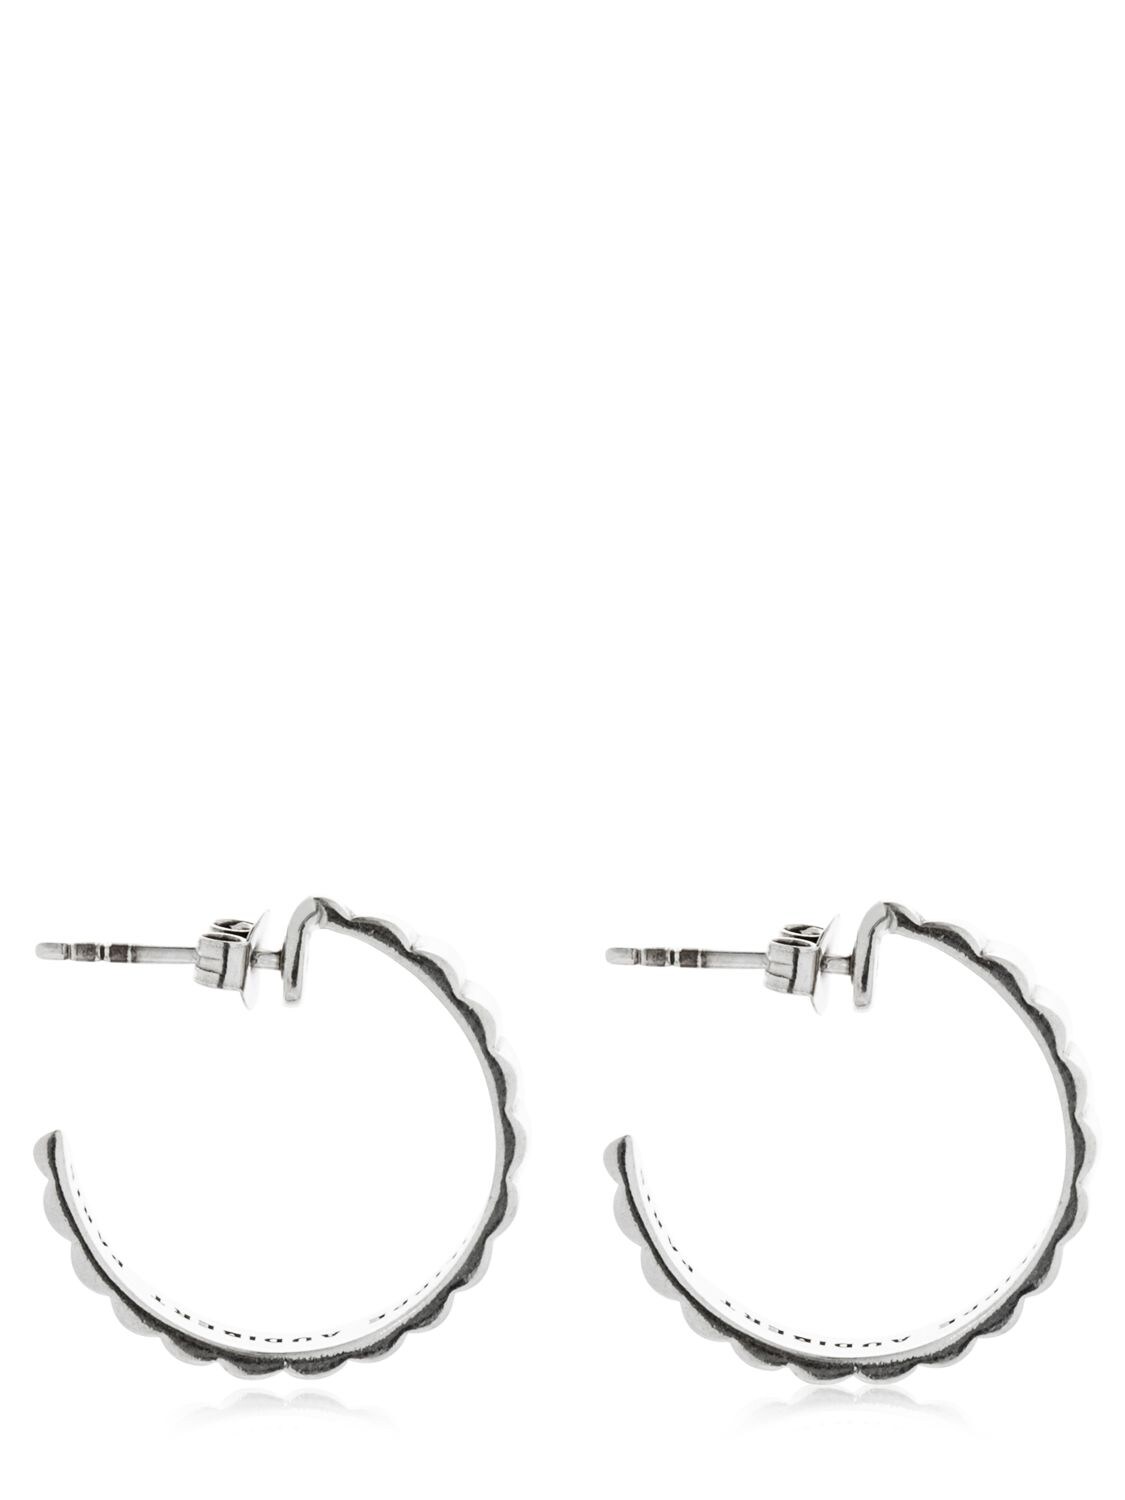 Philippe Audibert Donan Earrings In Silver